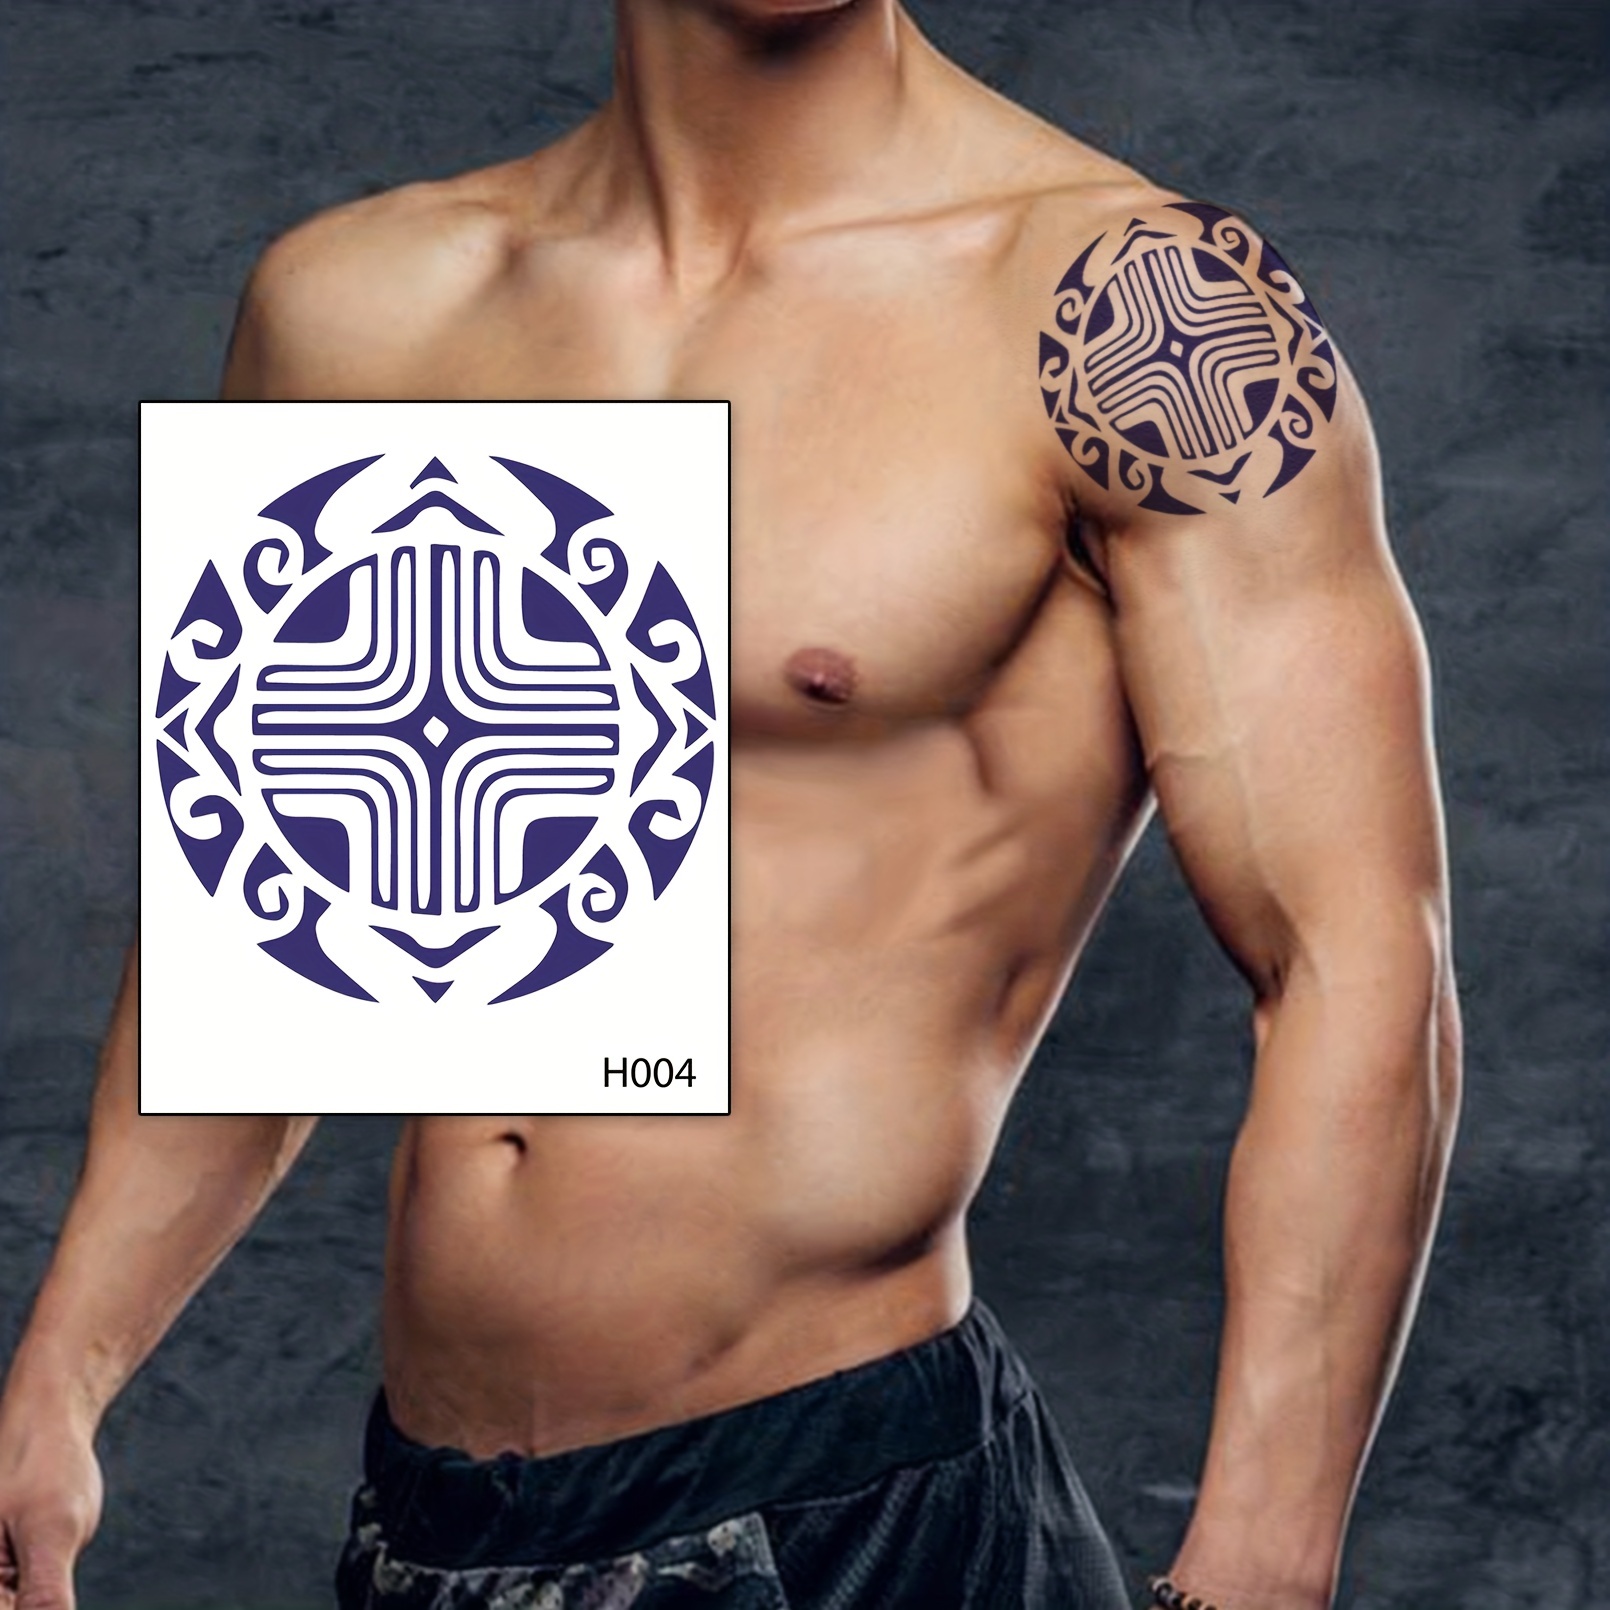 aztec tribal chest tattoos